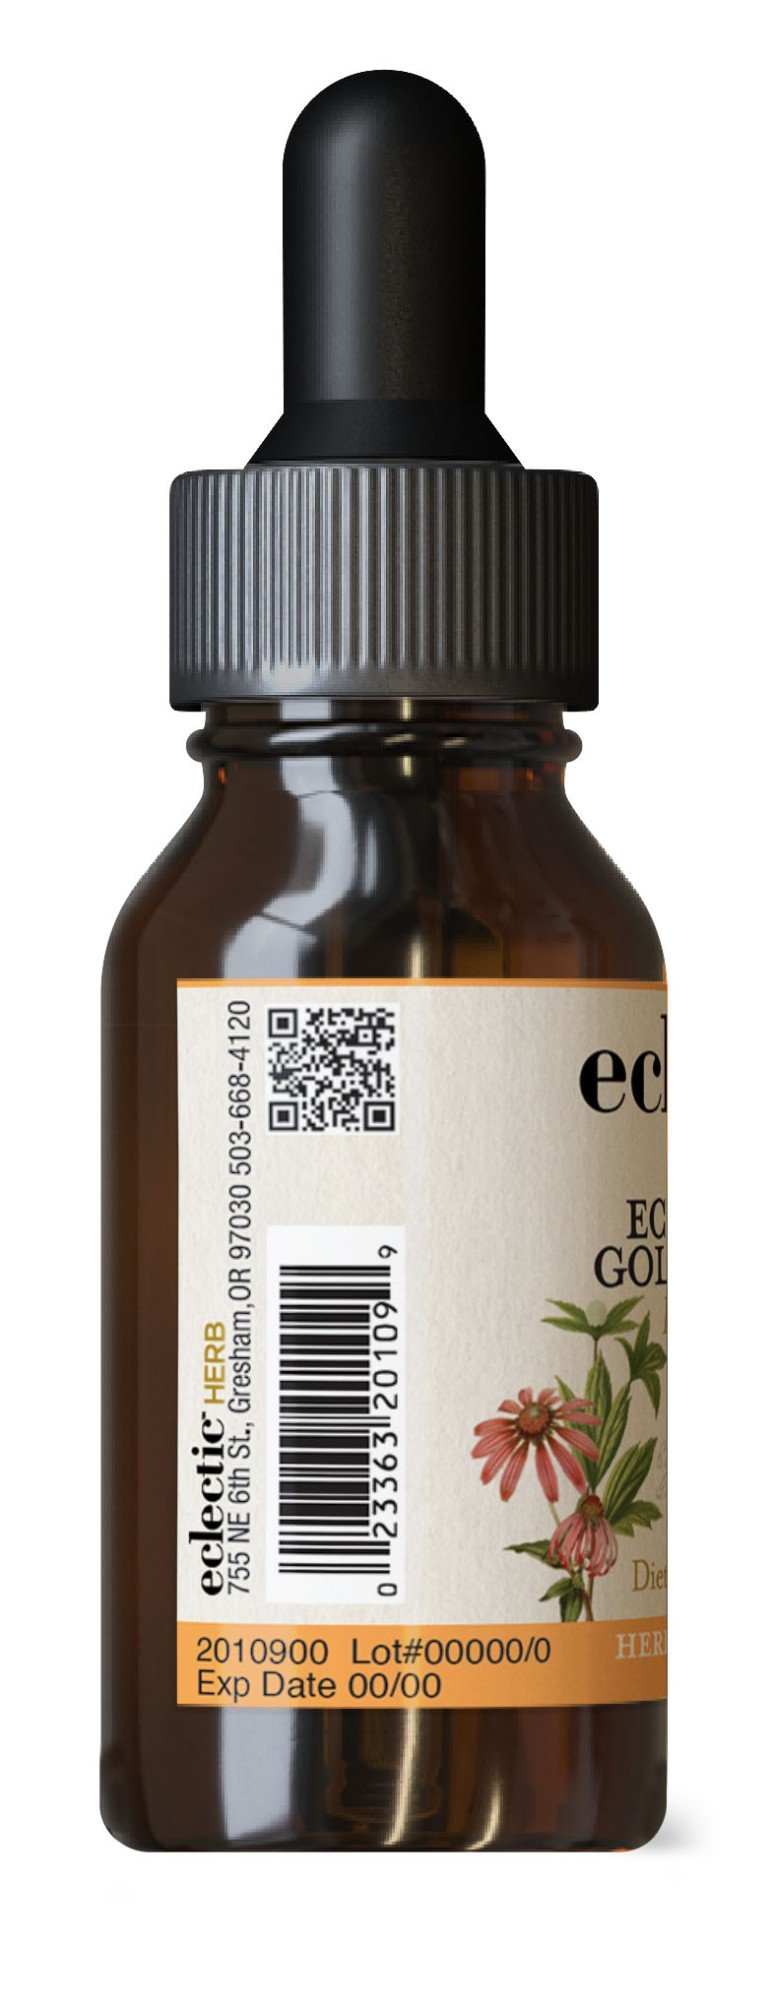 Eclectic Herb Echinacea-Goldenseal Orange Flavor No Alcohol Glycerite 1 oz Liquid